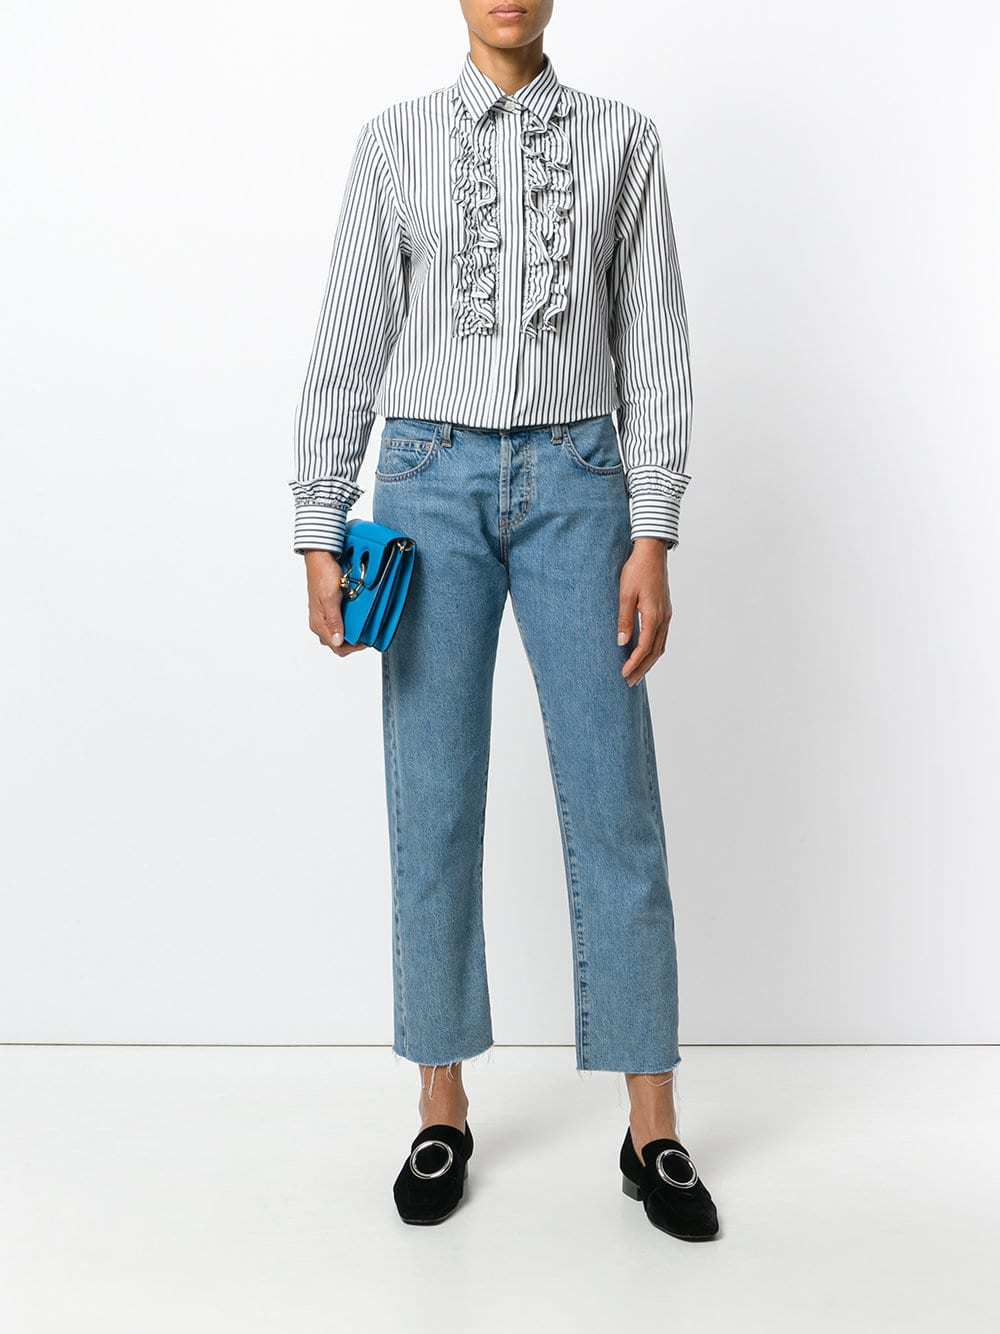 skammel Guggenheim Museum Åh gud Alexa Chung Striped Ruffled Shirt, $192 | farfetch.com | Lookastic